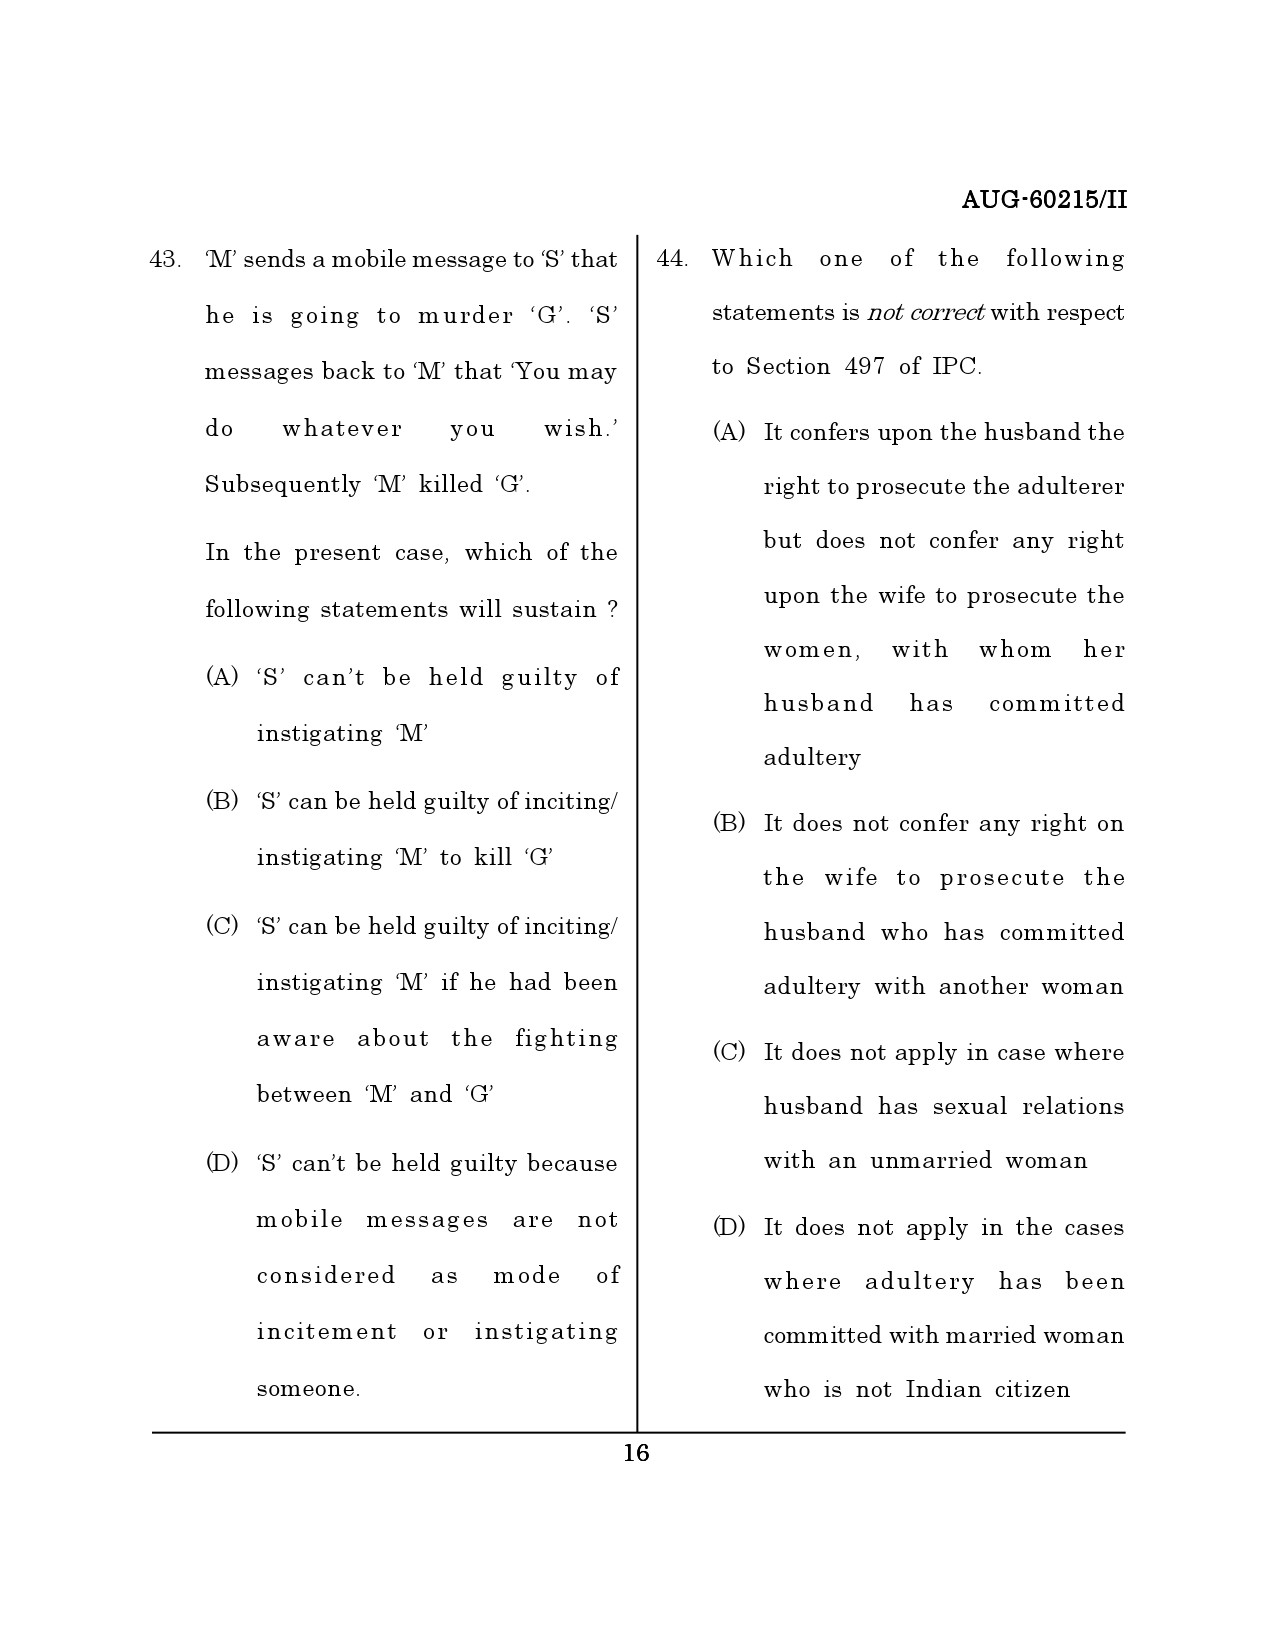 Maharashtra SET Law Question Paper II August 2015 15